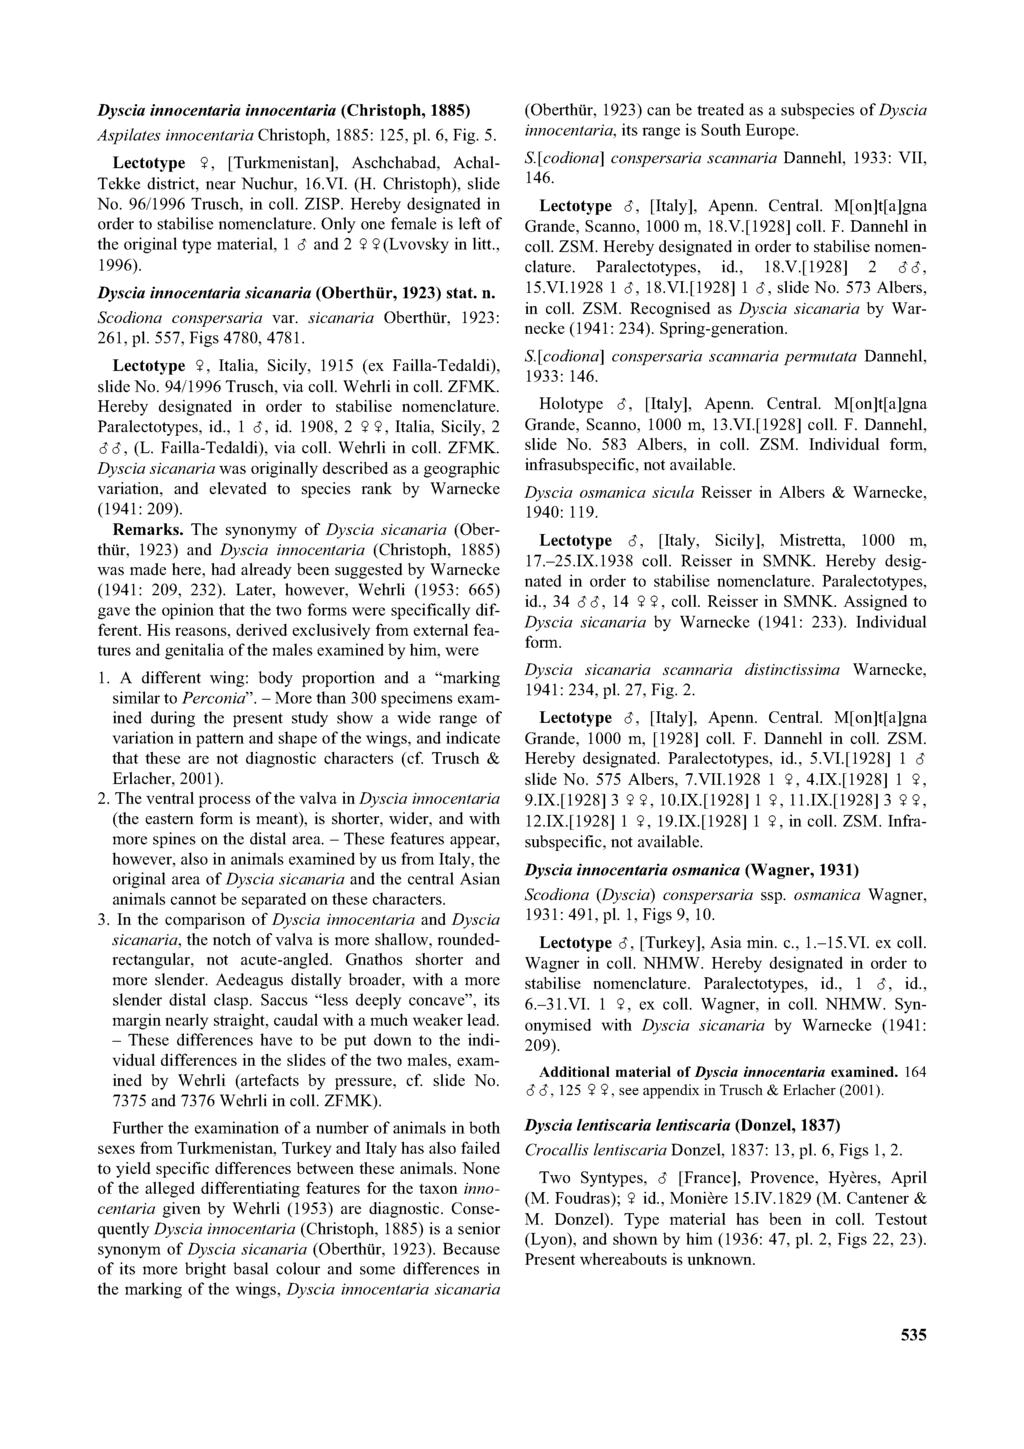 Dyscia innocentaria innocentaria (Christoph, 1885) Aspilates innocentaria Christoph, 1885: 125, pi. 6, Fig. 5. Lectotype 5, [Turkmenistan], Aschchabad, Achal- Tekke district, near Nuchur, 16.VI. (H.